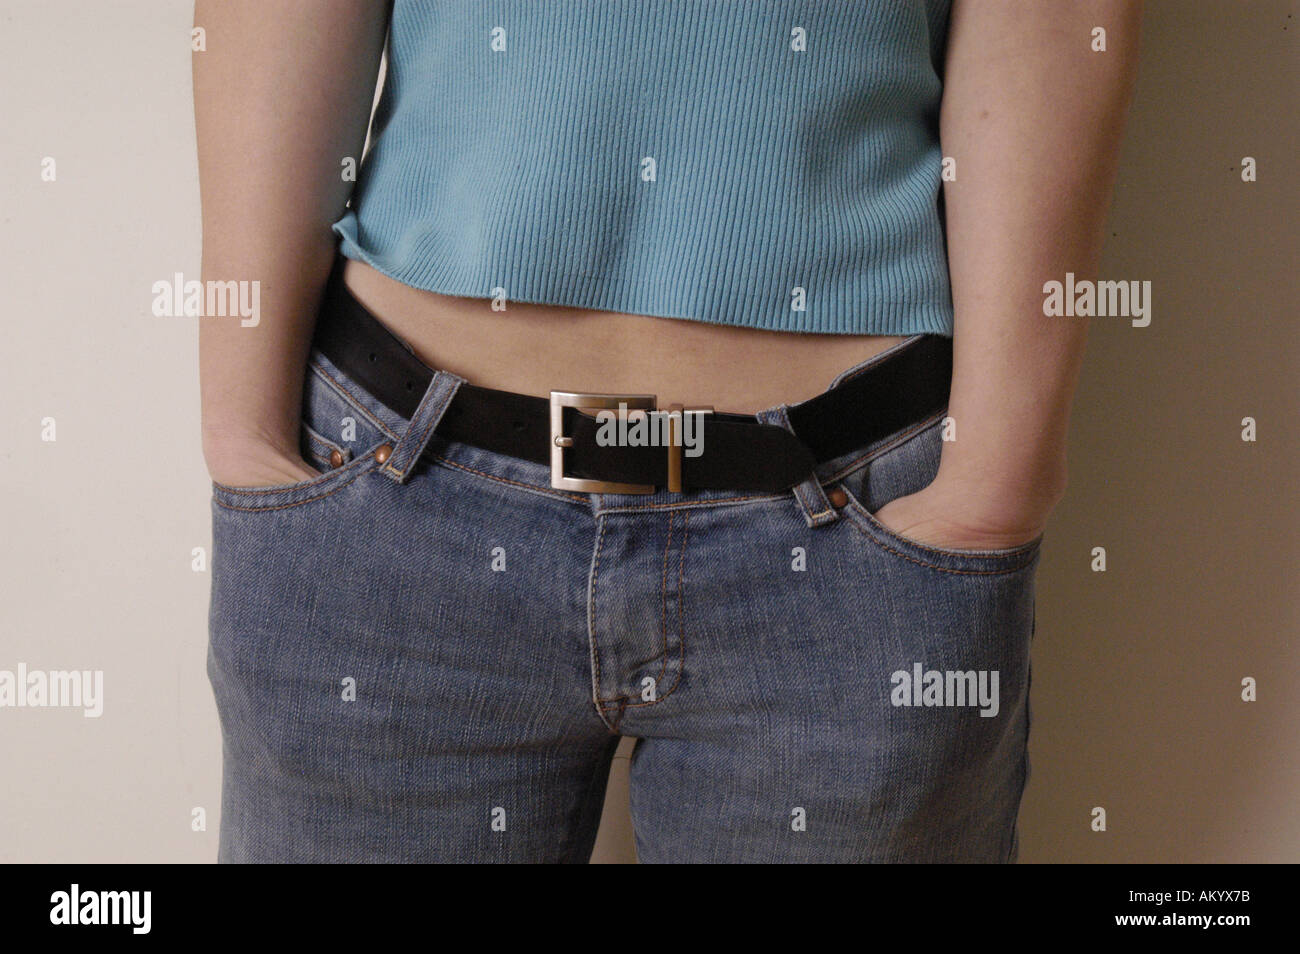 https://c8.alamy.com/comp/AKYX7B/waist-jeans-woman-female-girl-belt-buckle-belly-tummy-stomach-ache-AKYX7B.jpg